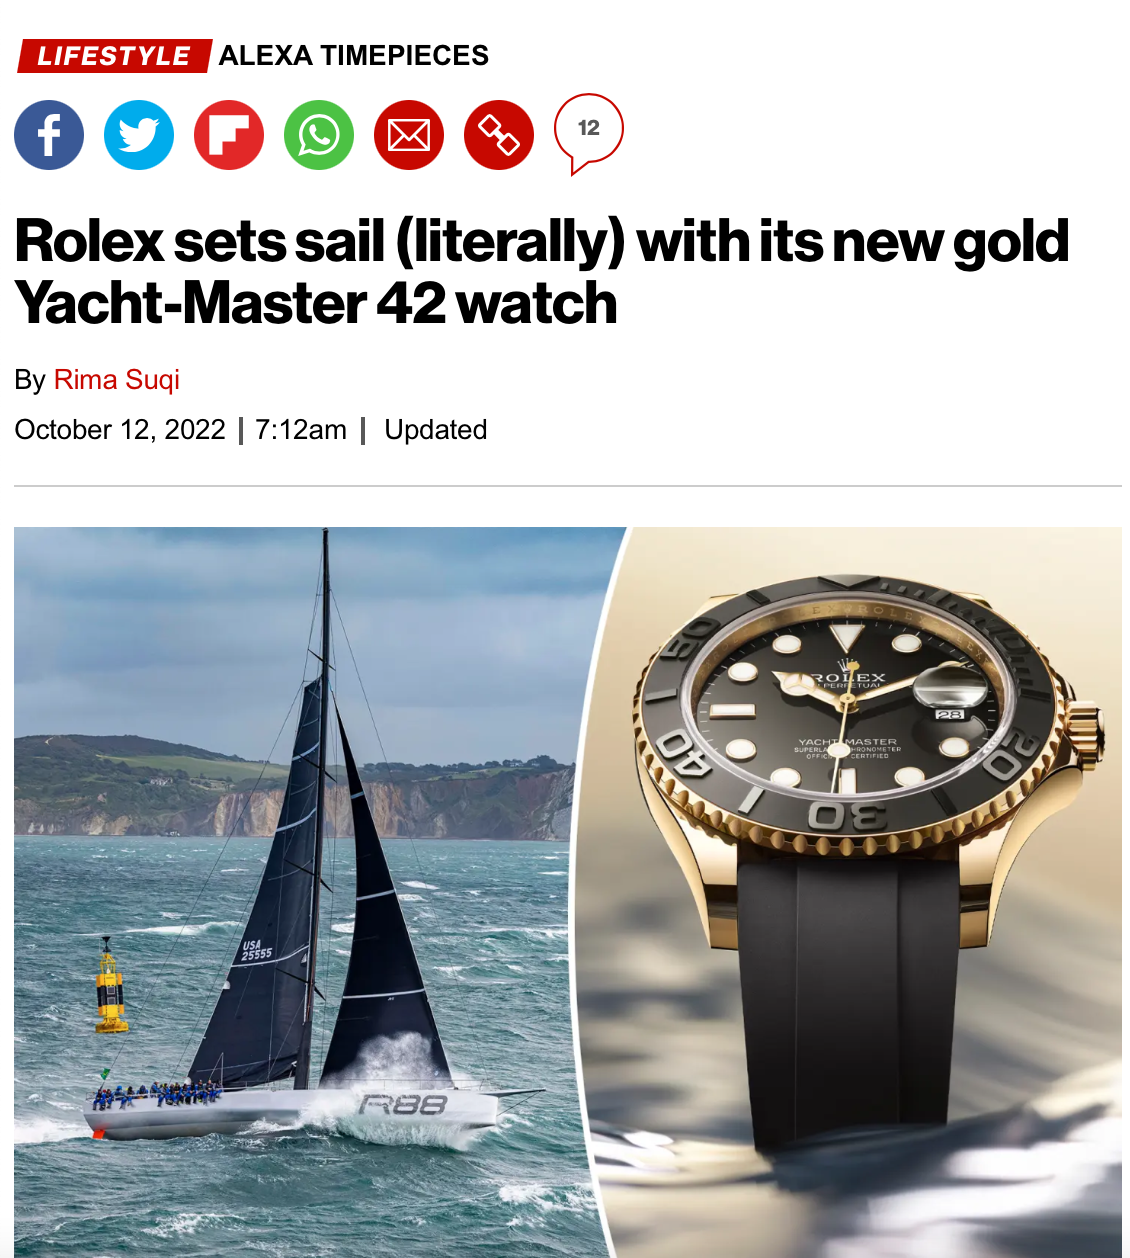 Rolex gold Yachtmaster, Alexa, NY Post, Rima Suqi